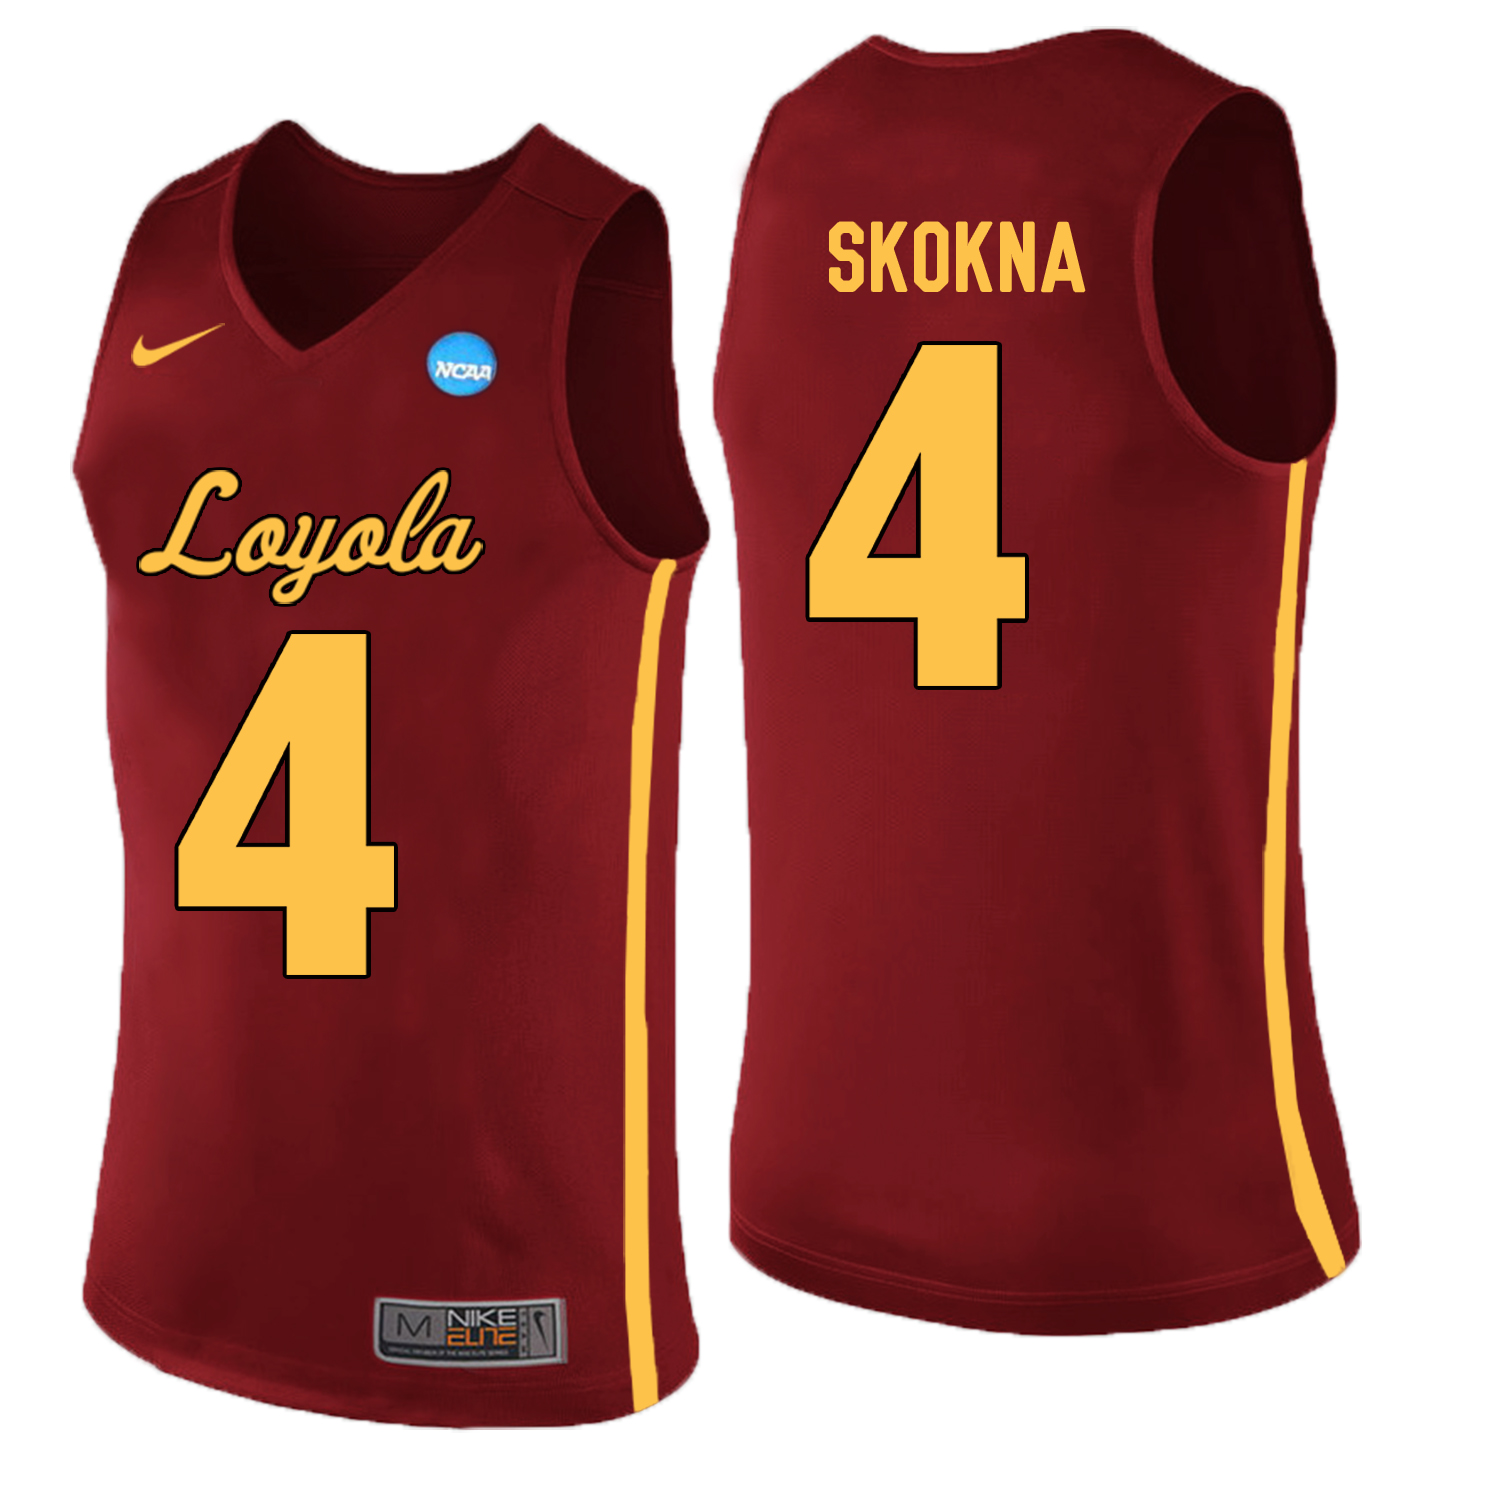 Loyola (Chi) Ramblers 4 Bruno Skokna Red College Basketball Jersey